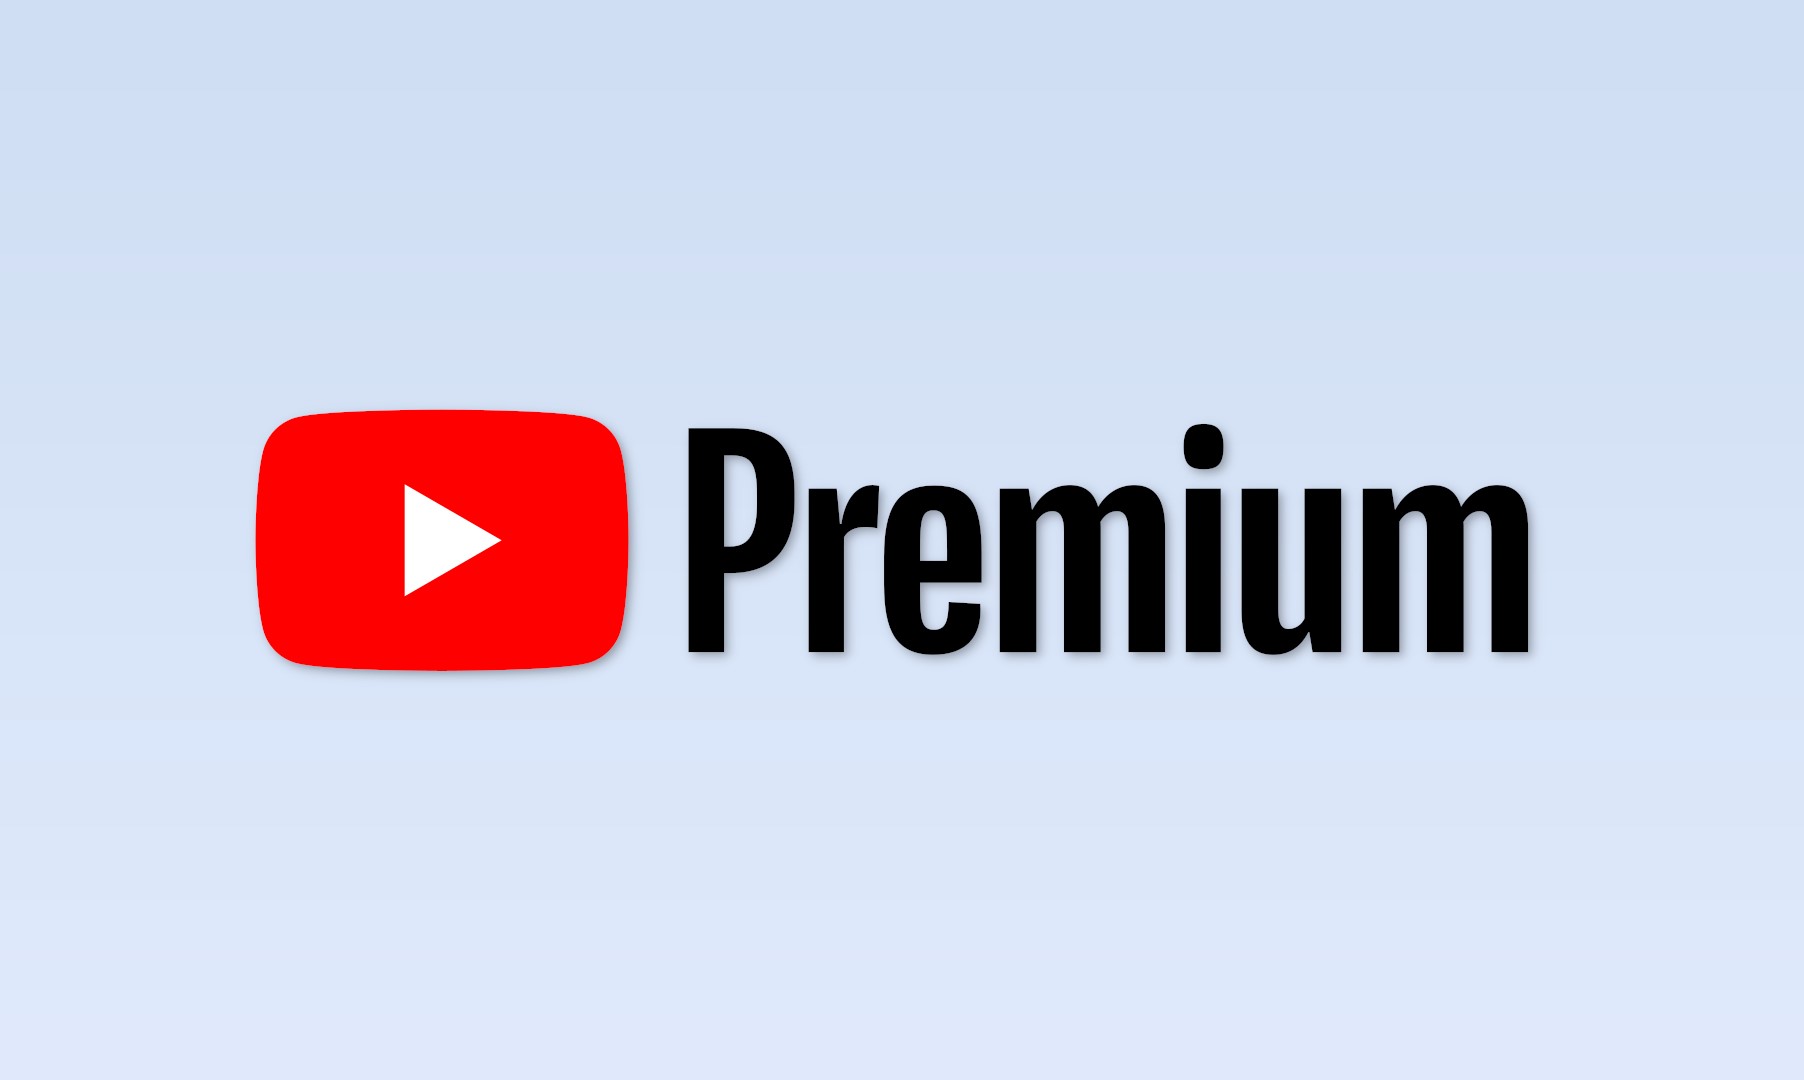 youtube premium